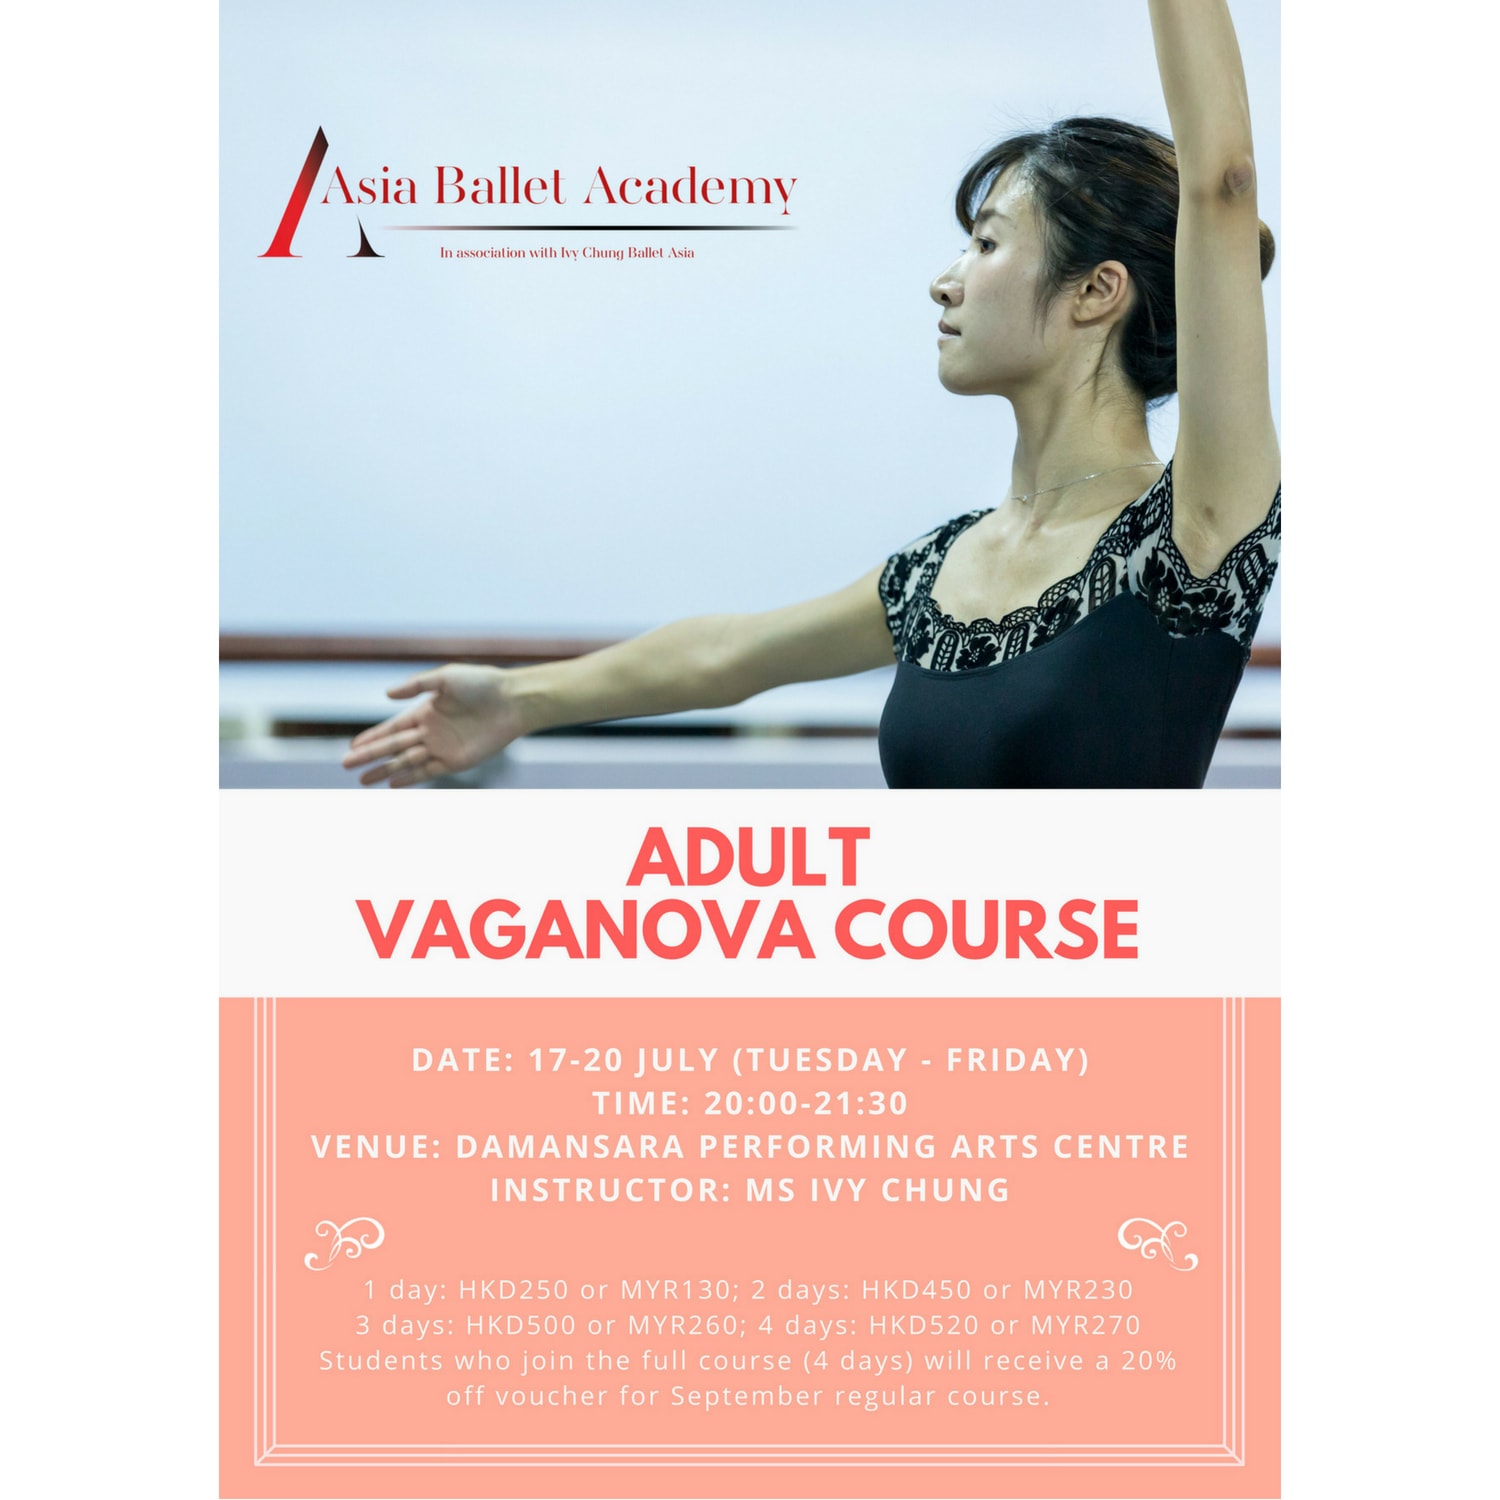 Vaganova Adult Course by Asia Ballet Academy